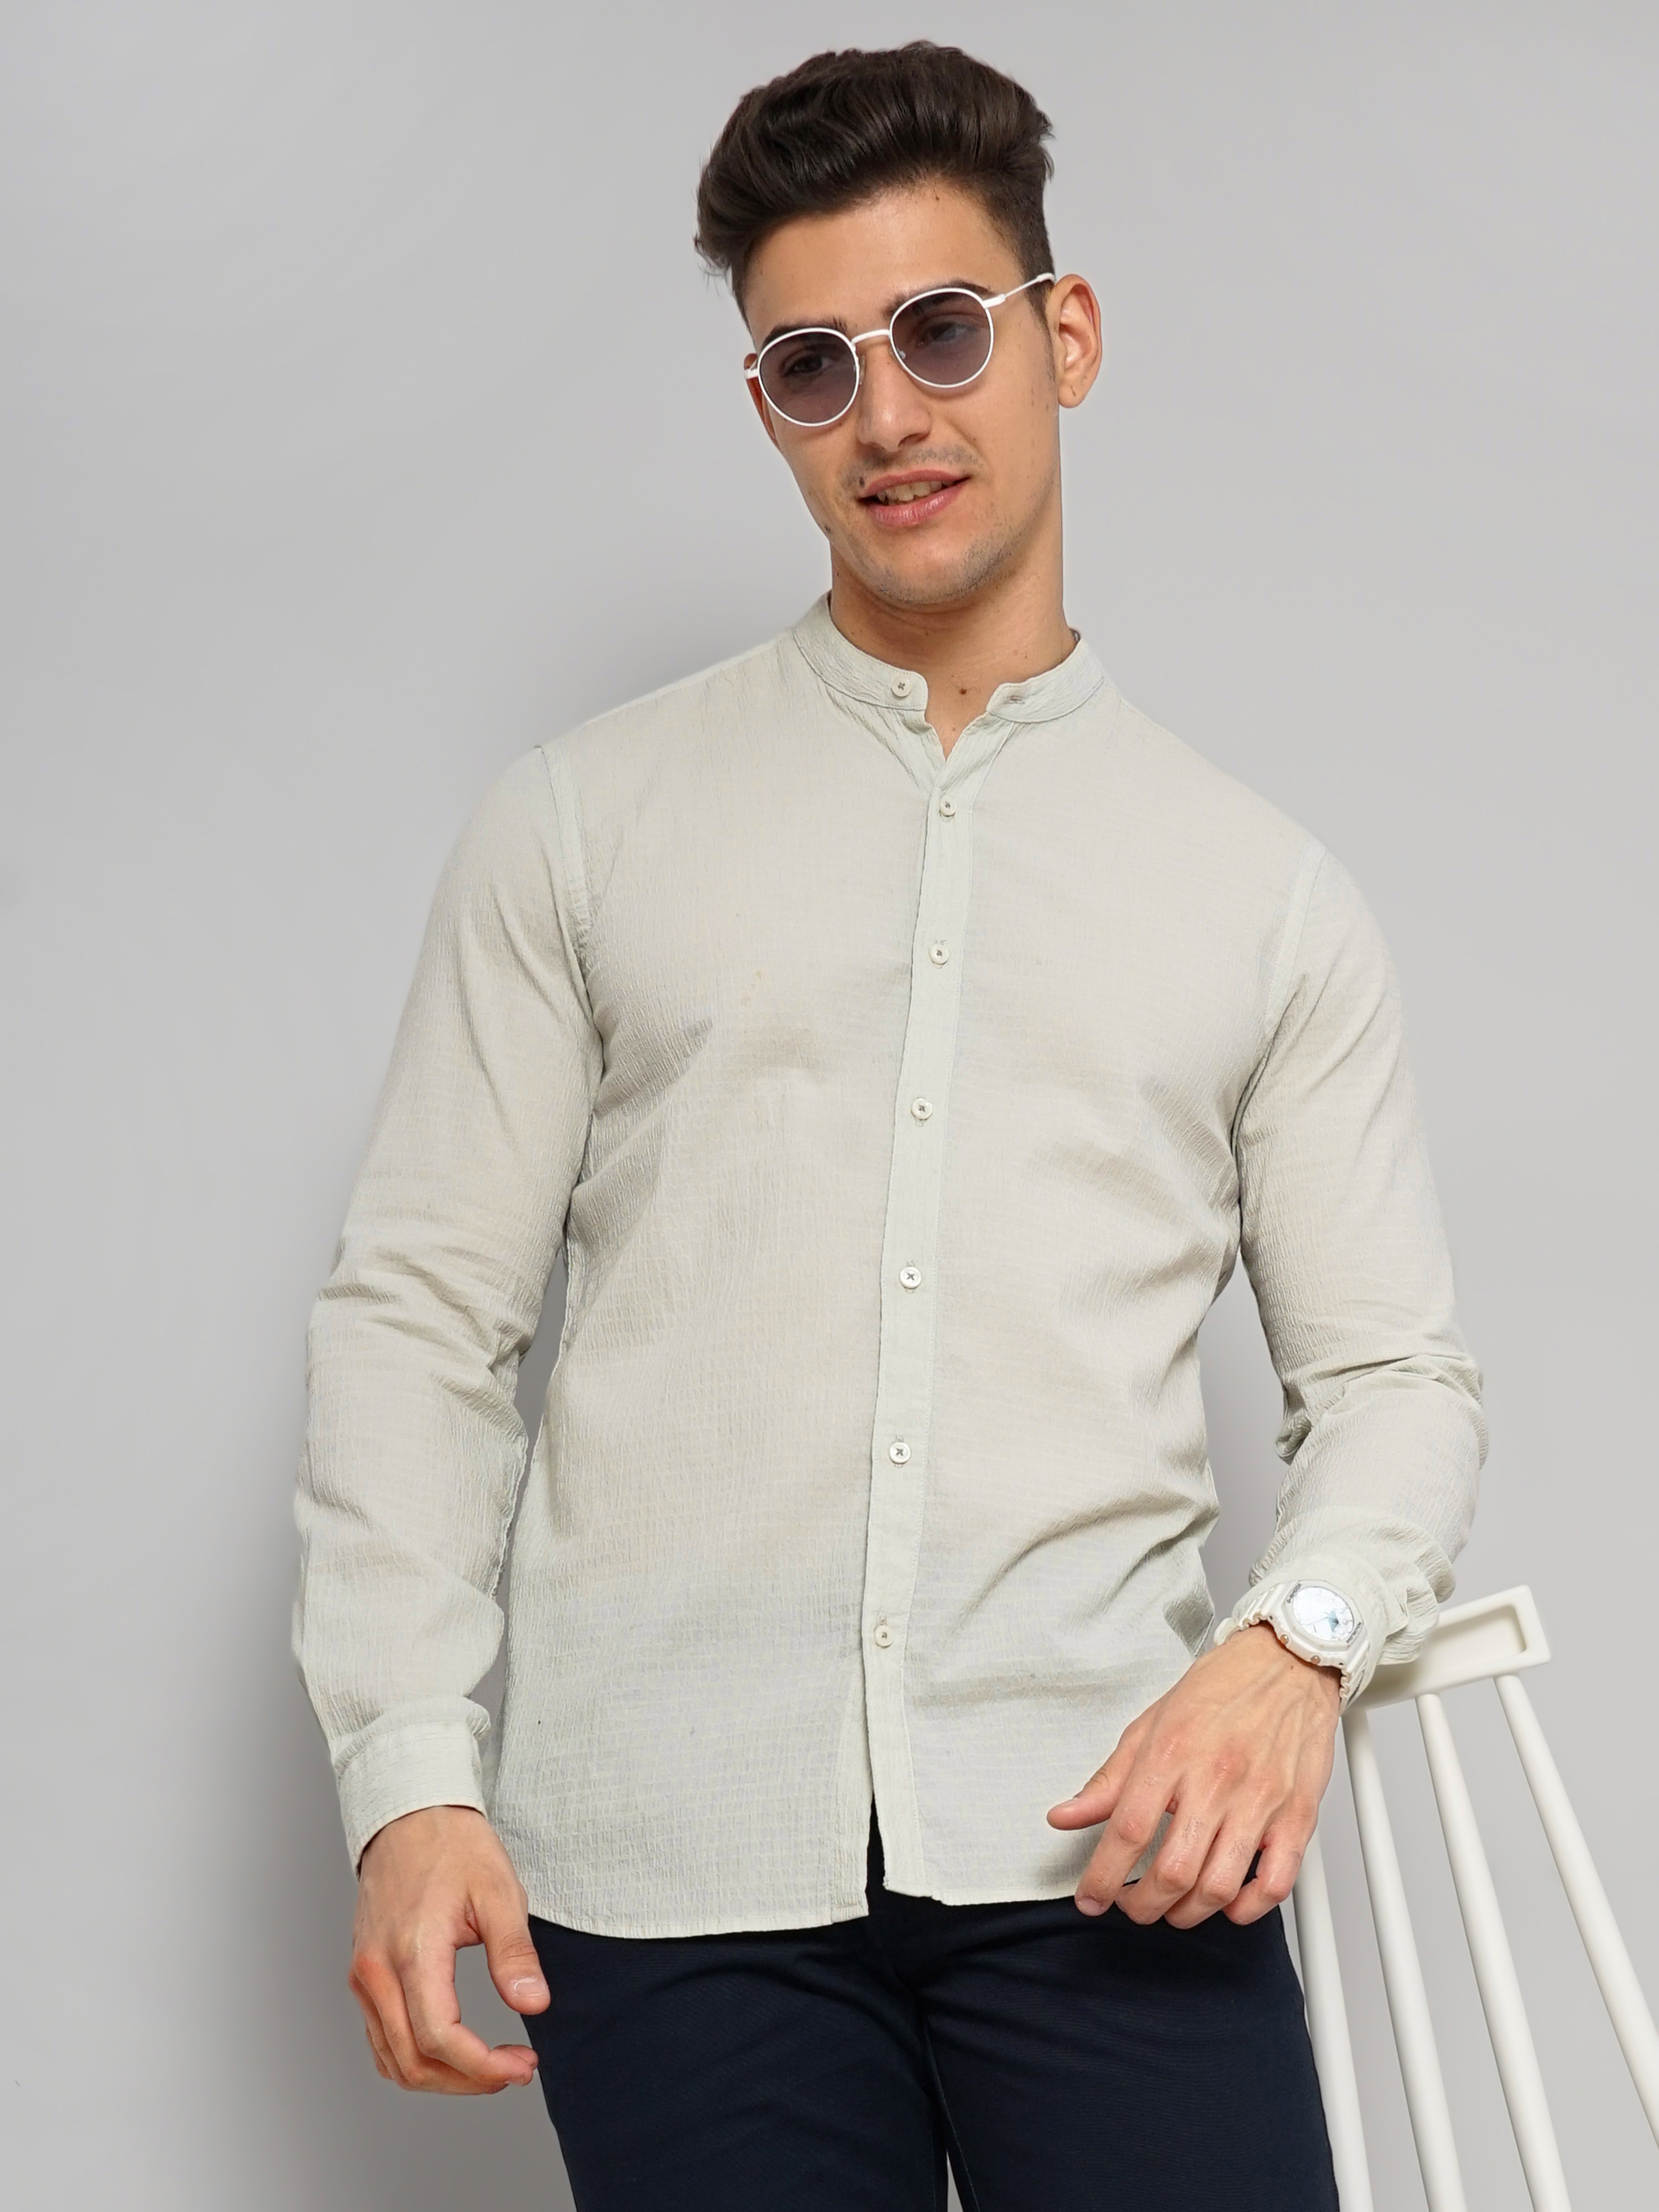 celio | Men's White Solid Casual Shirts